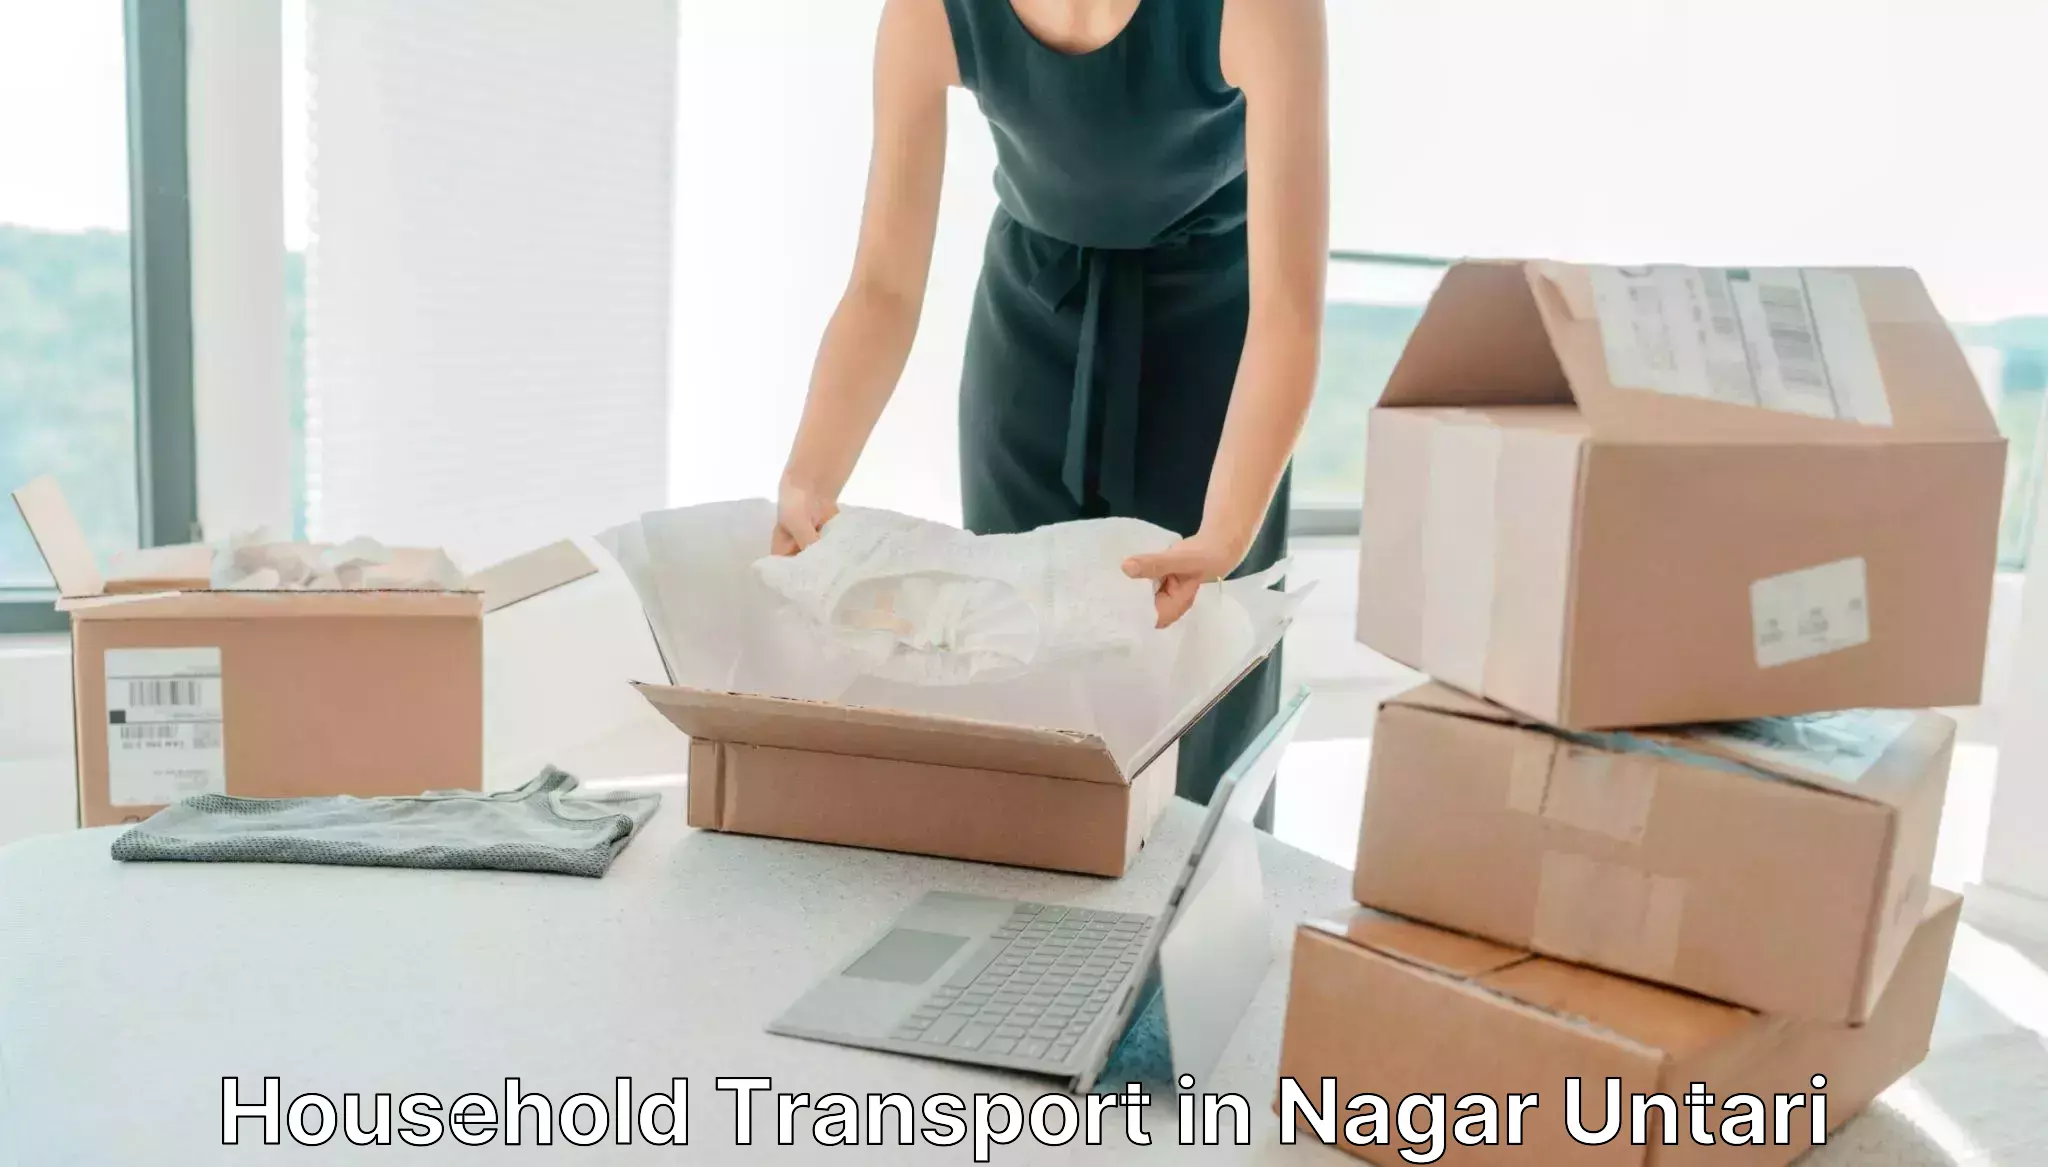 Moving and storage services in Nagar Untari